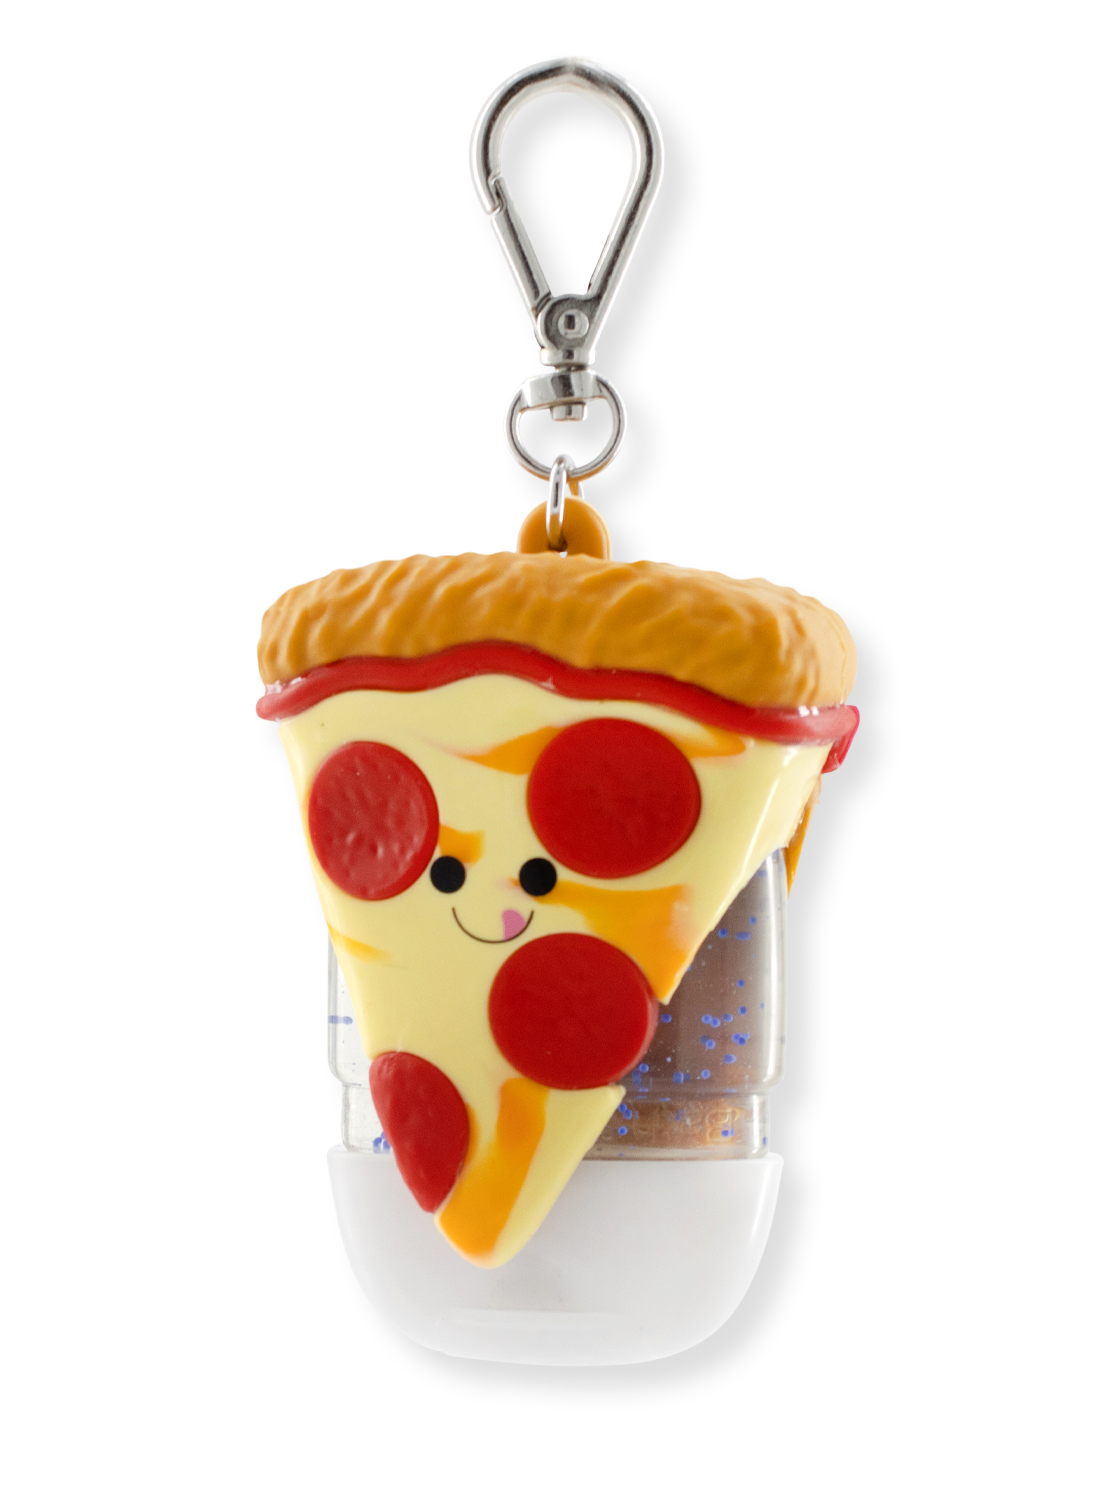 Hand Sanitizer Gel Pendant - Happy Pizza Slice - Pizza